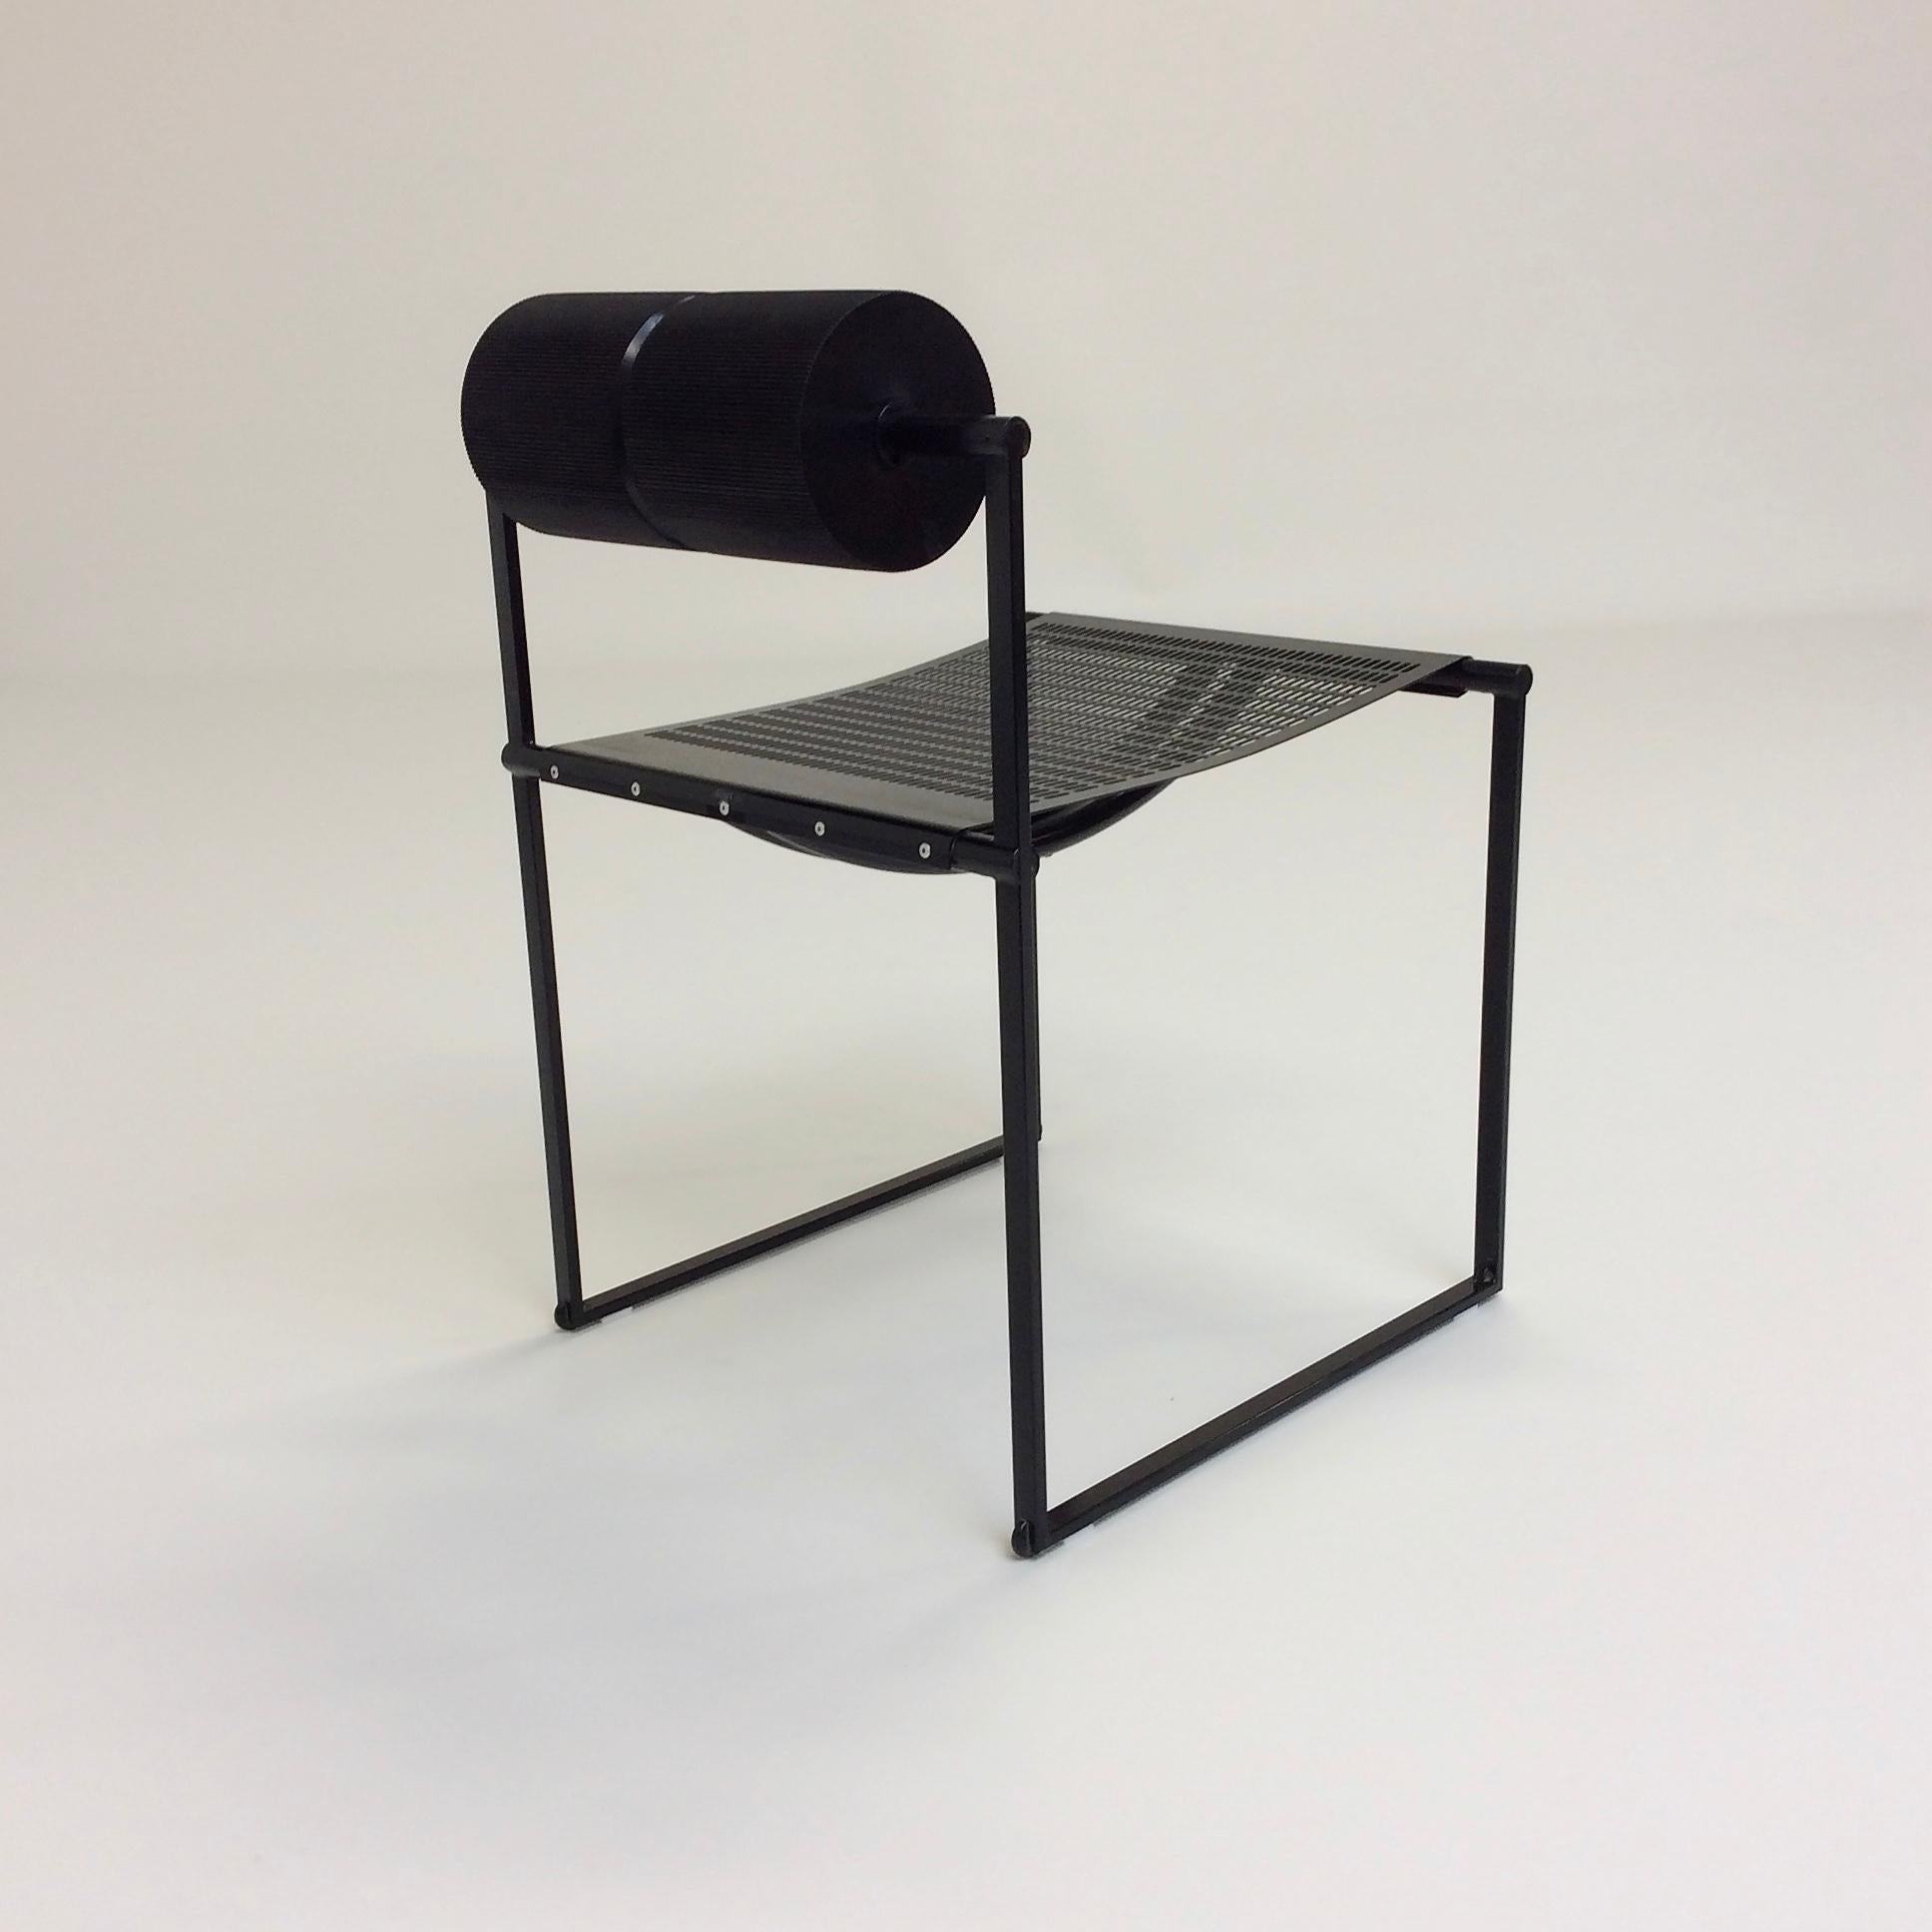 Enameled Mario Botta Pair of Prima Model Chair by Alias, 1982, Italy